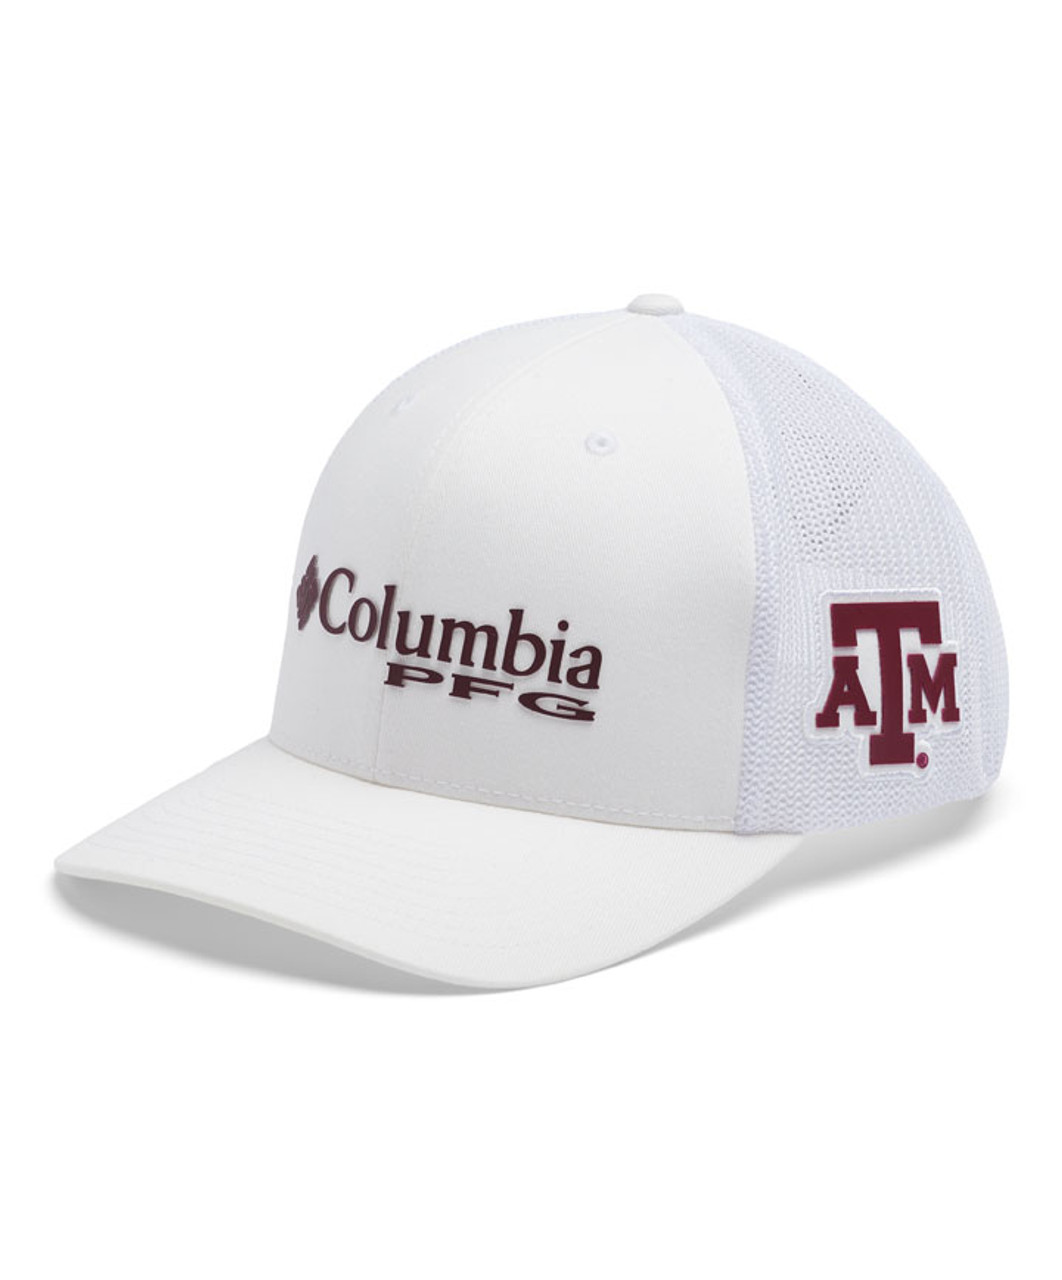 Columbia Hat Snapback Baseball Cap Burgundy White Sewn Patch Logo